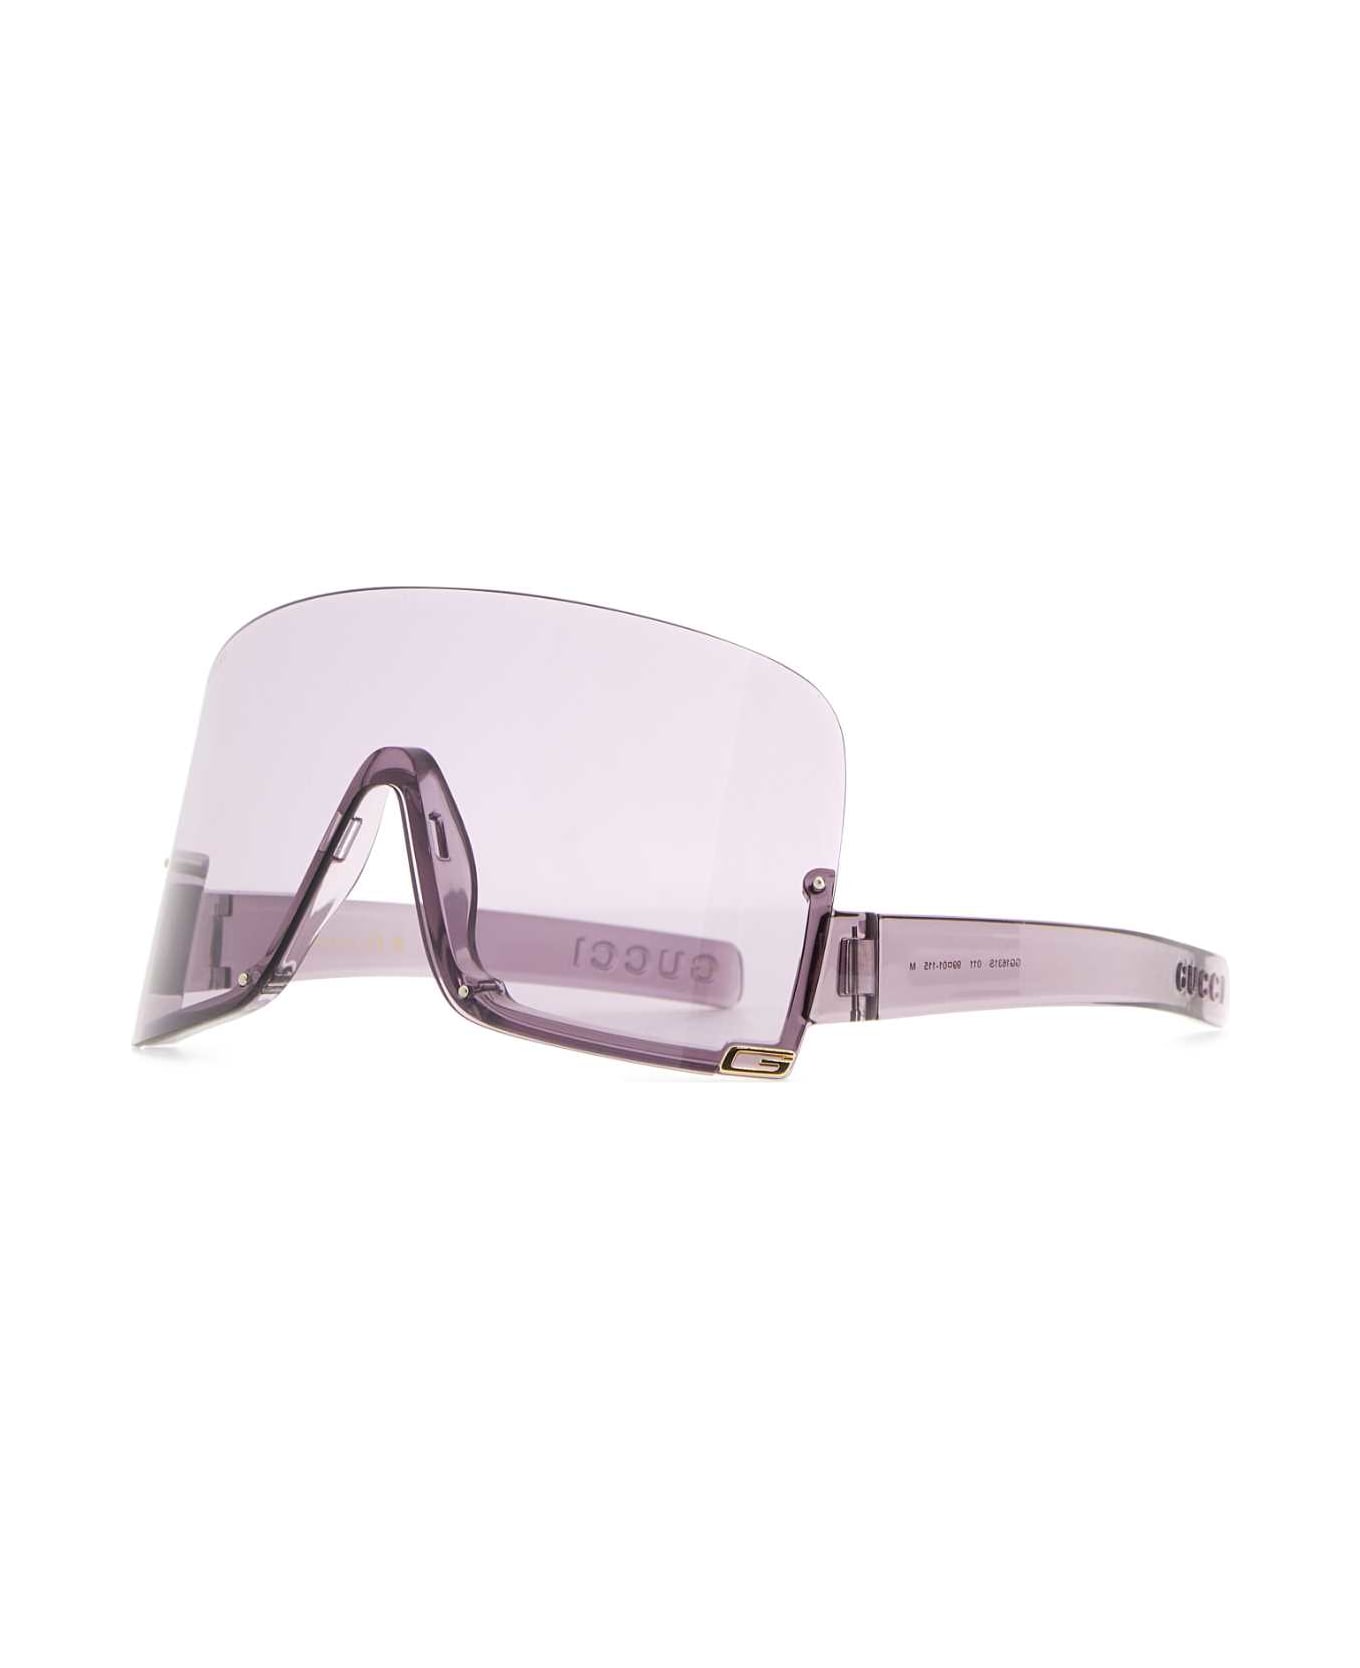 Gucci Purple Acetate Sunglasses - 5353 サングラス